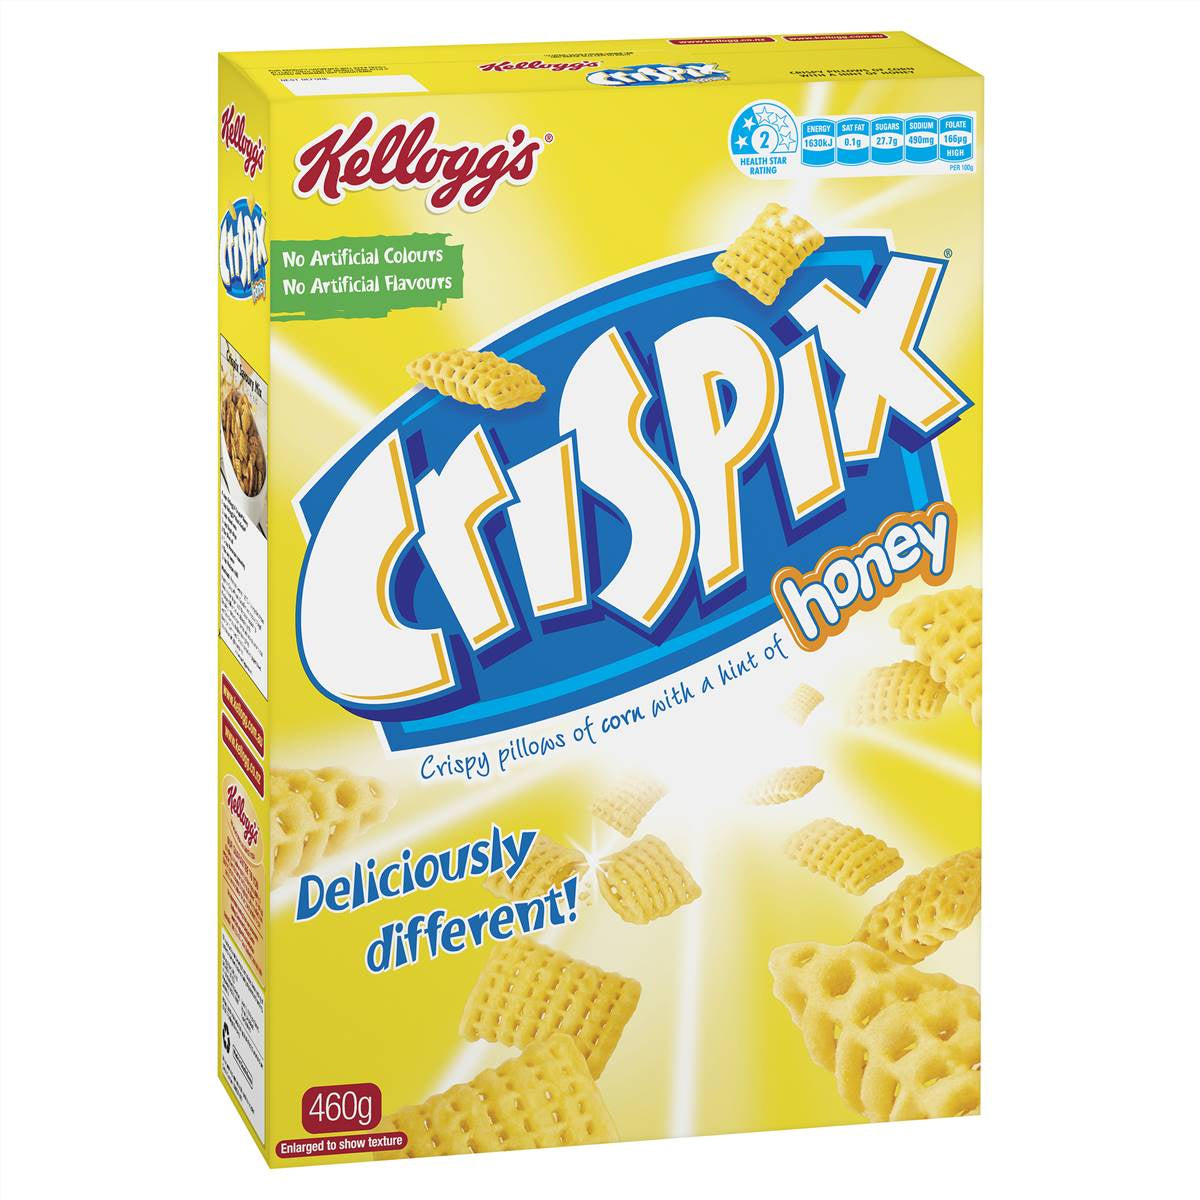 Kellogg's Crispix Honey Pillows Breakfast Cereal 460g